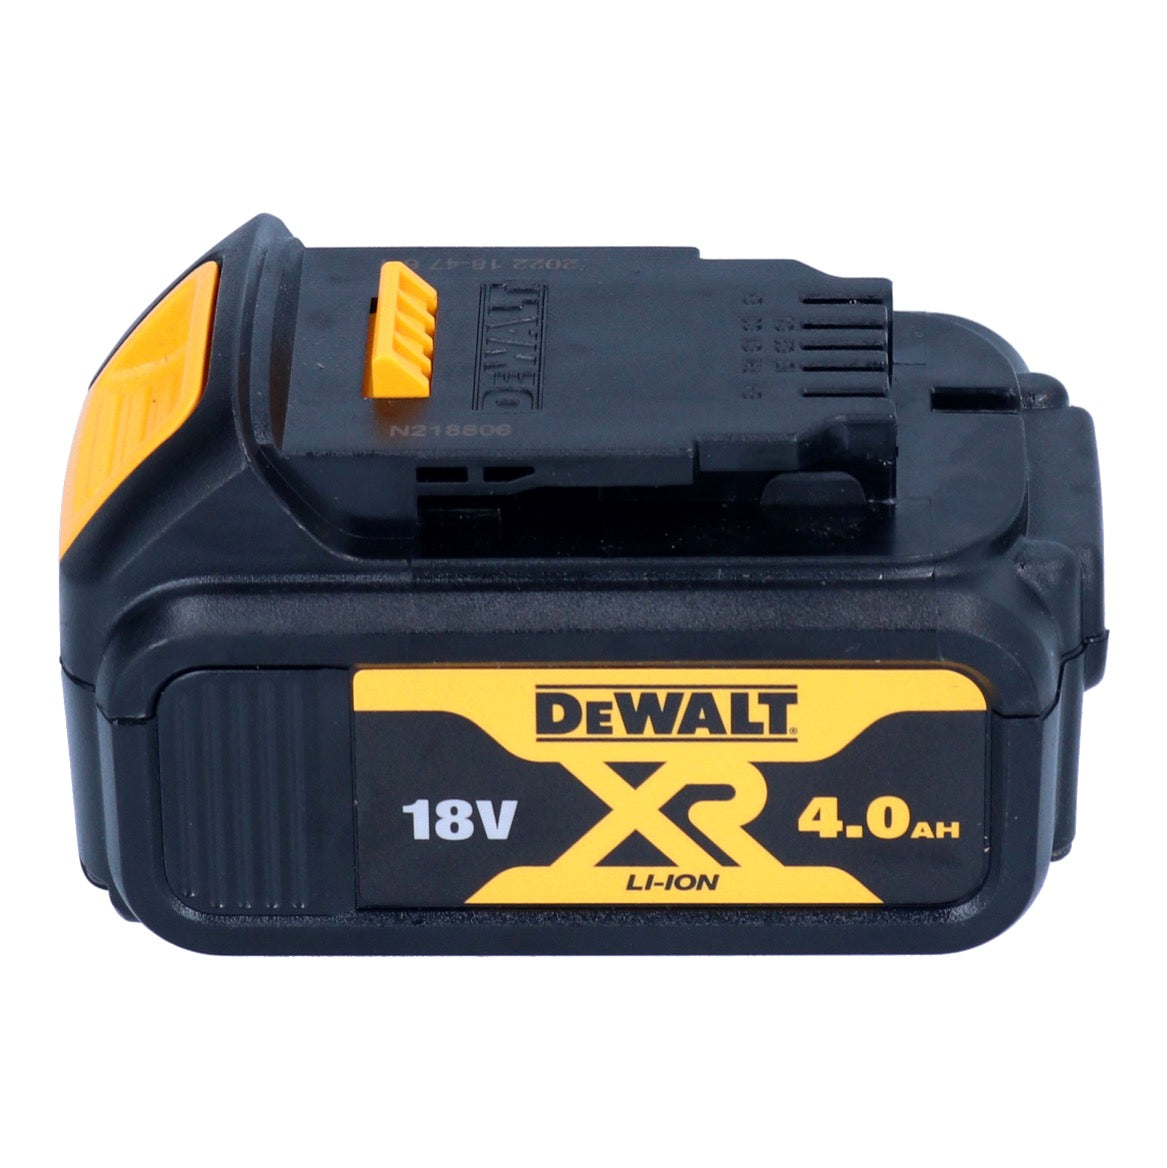 DeWalt DCD 800 NT Akku Bohrschrauber 18 V 90 Nm Brushless + 1x Akku 4,0 Ah + TSTAK - ohne Ladegerät